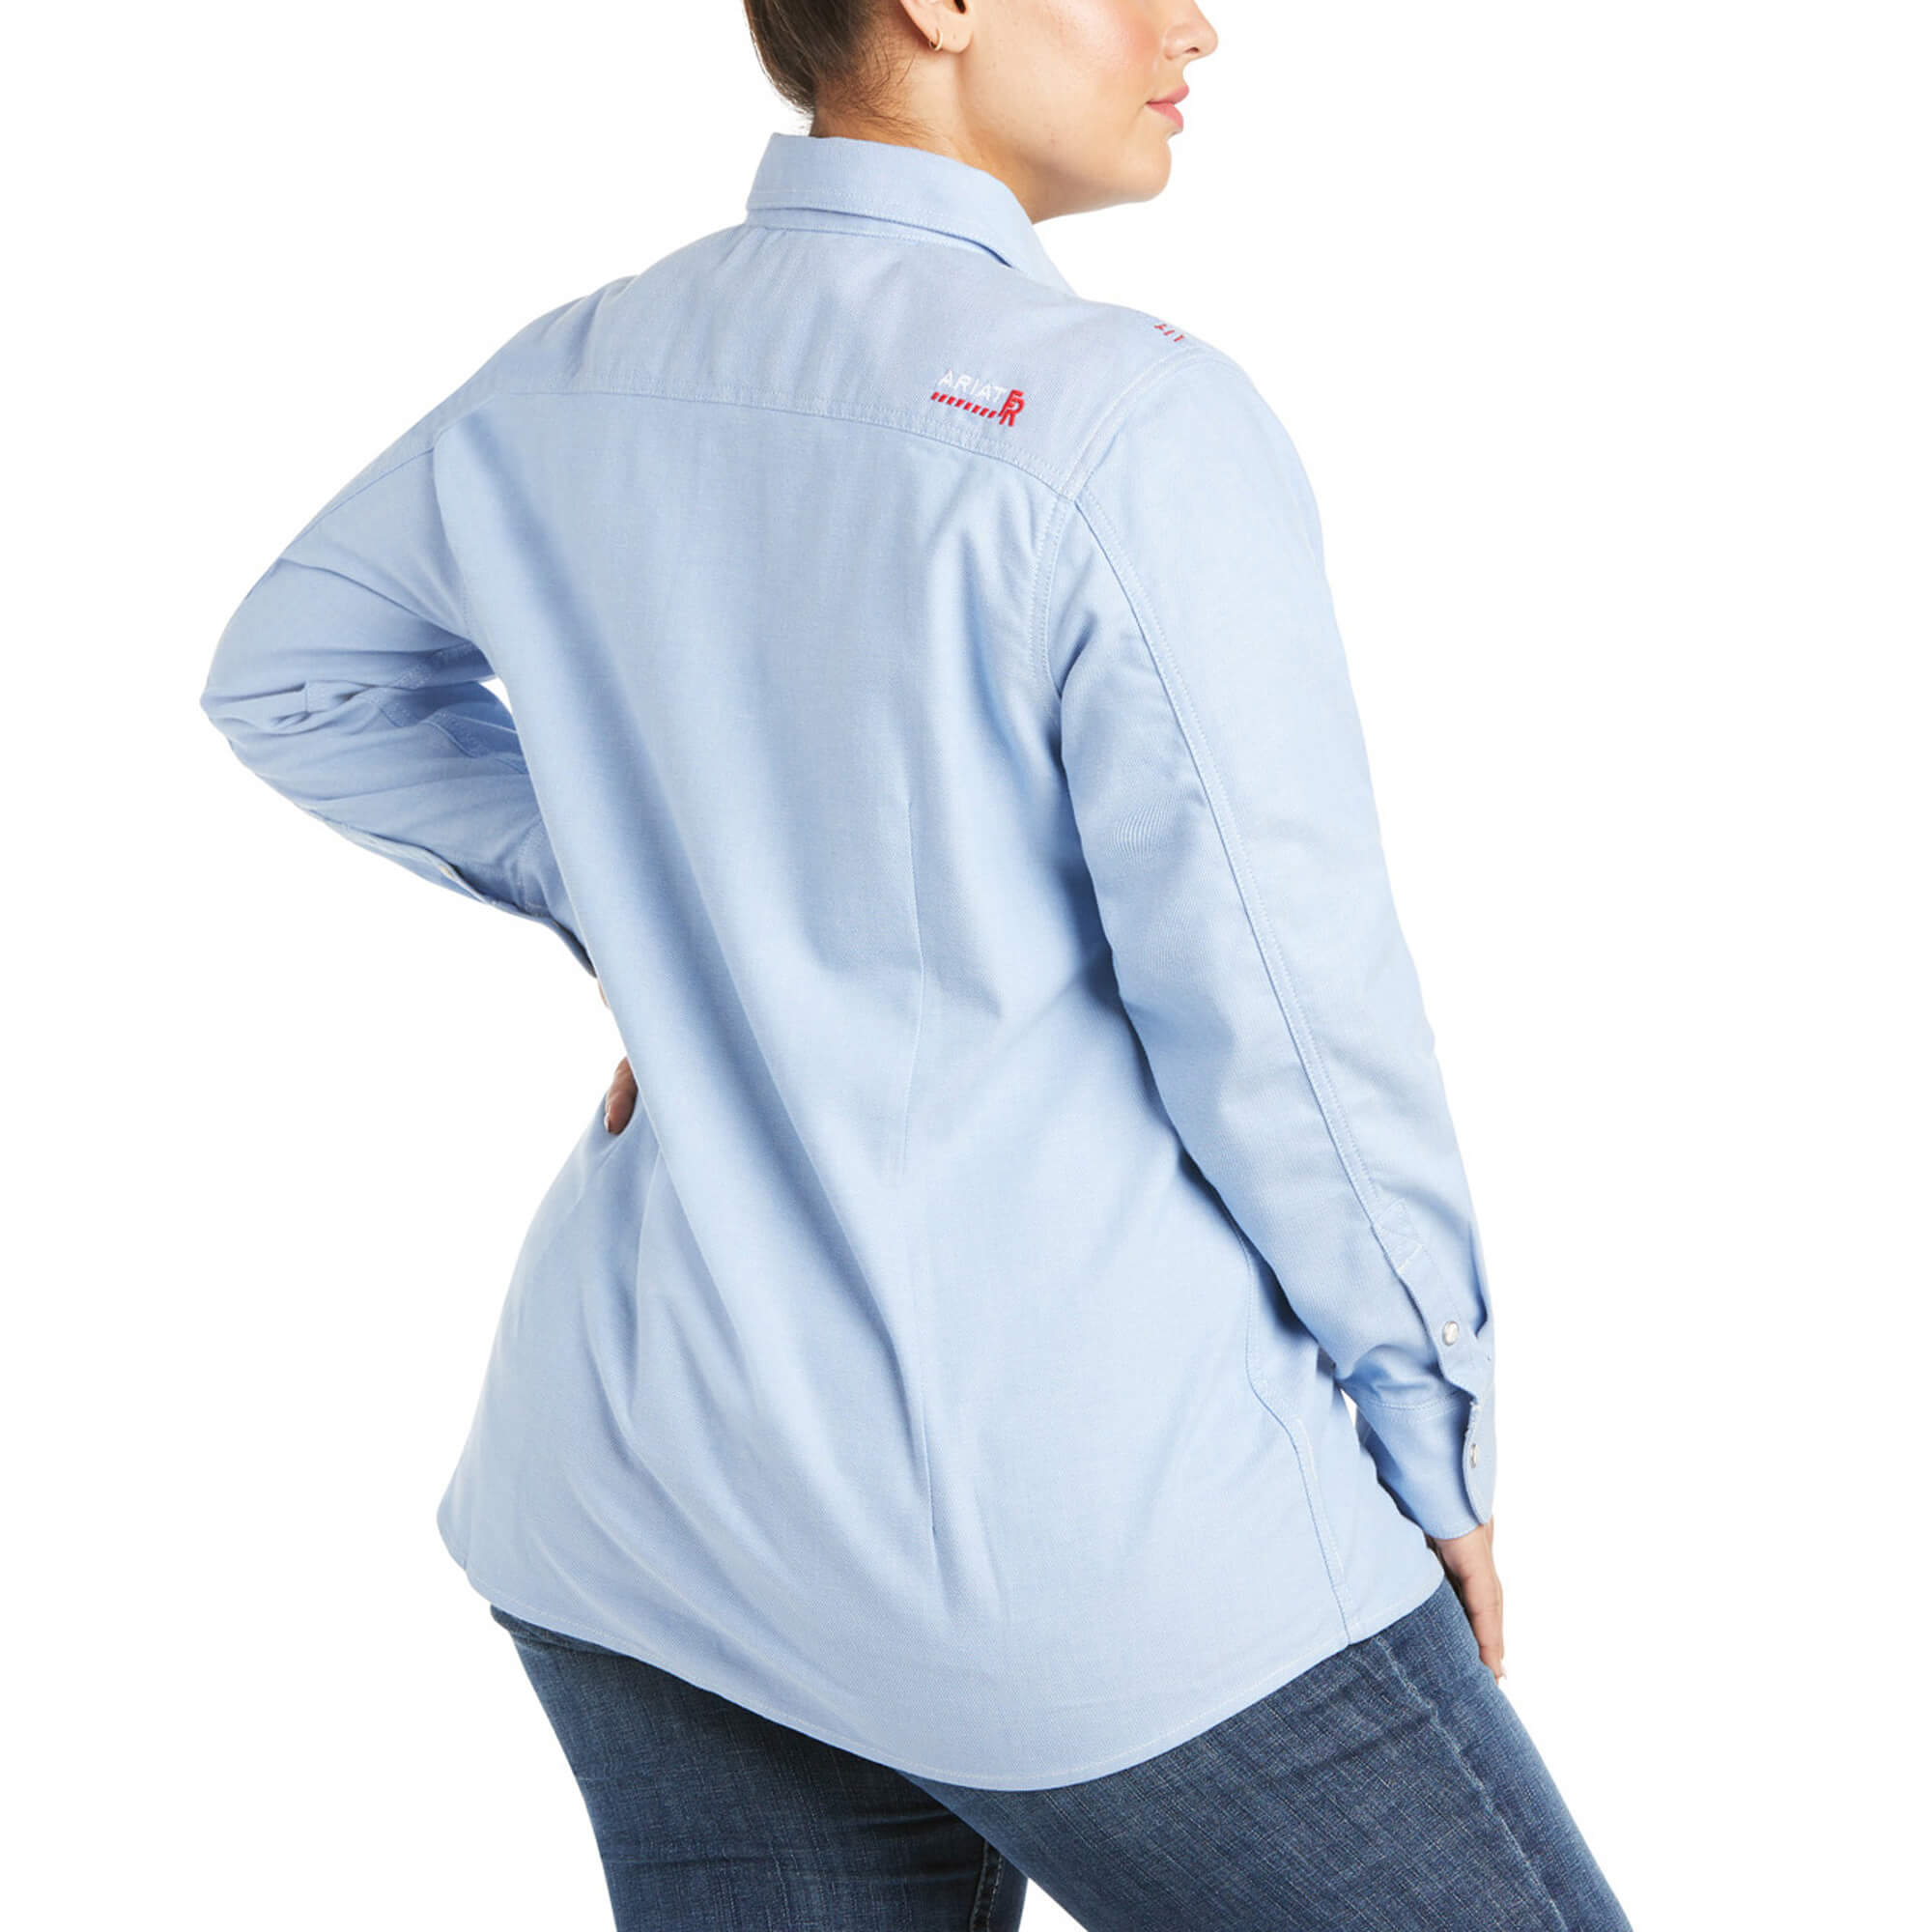 Ariat Women's FR Solid DuraStretch Snap Work Shirt